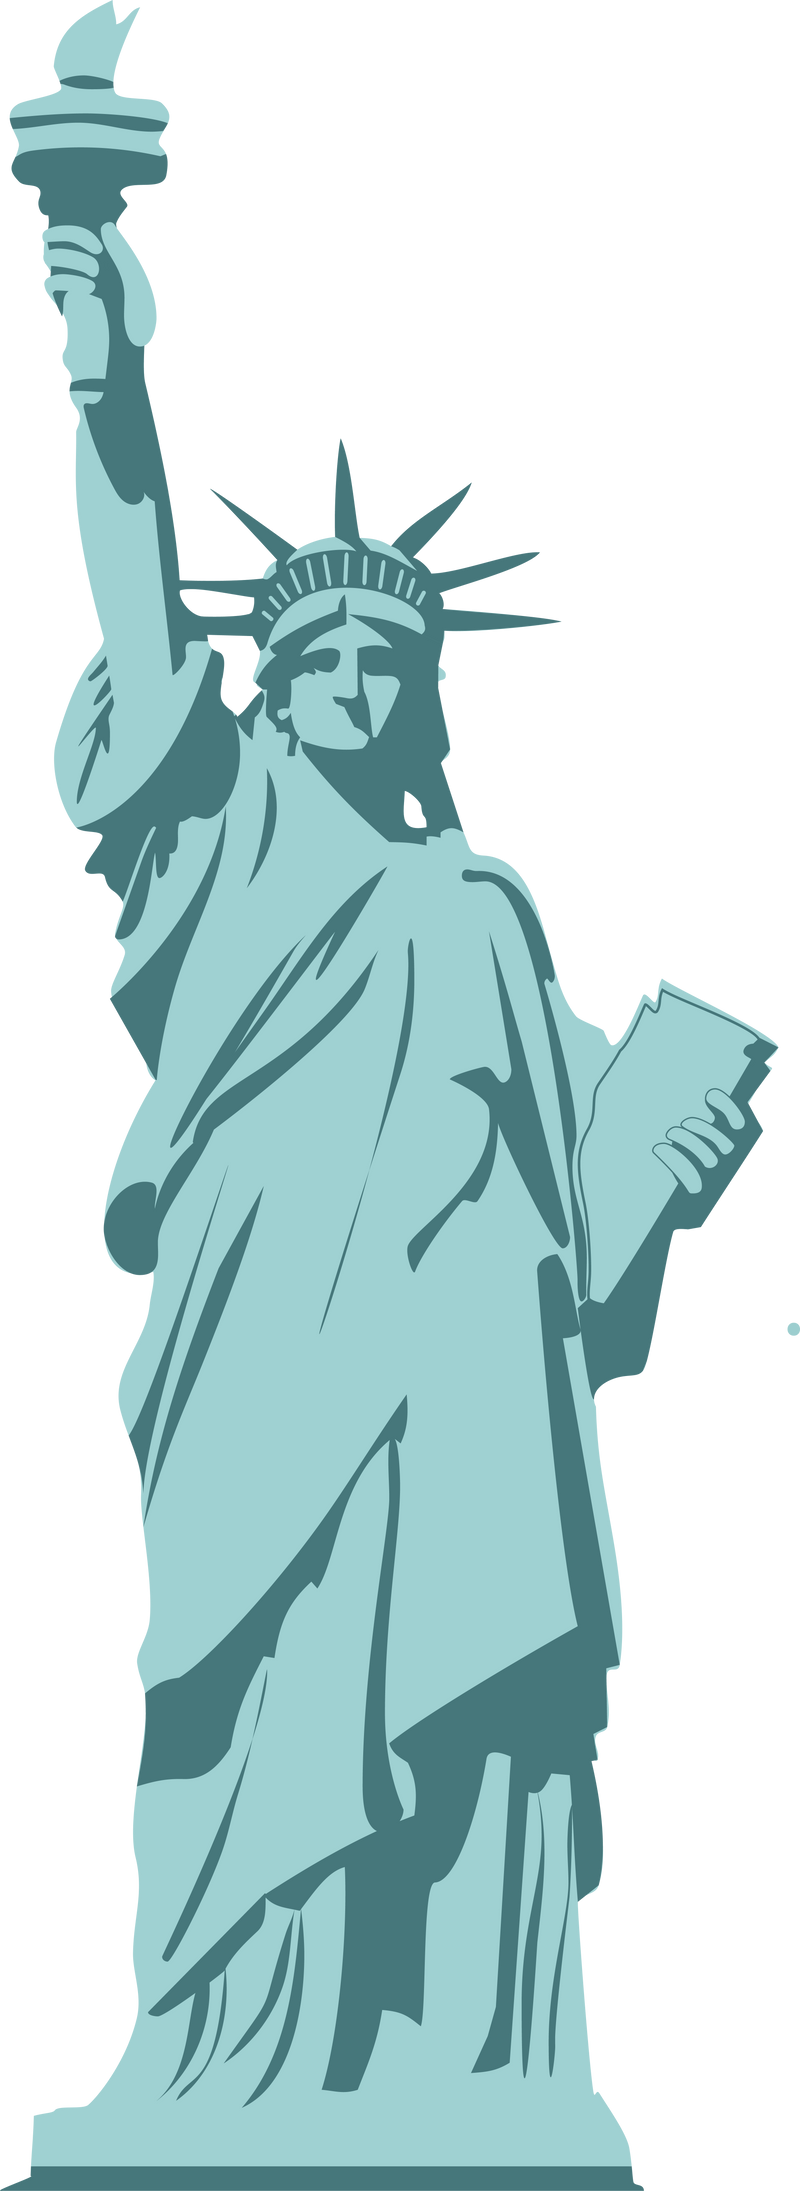 Statue of Liberty Icon